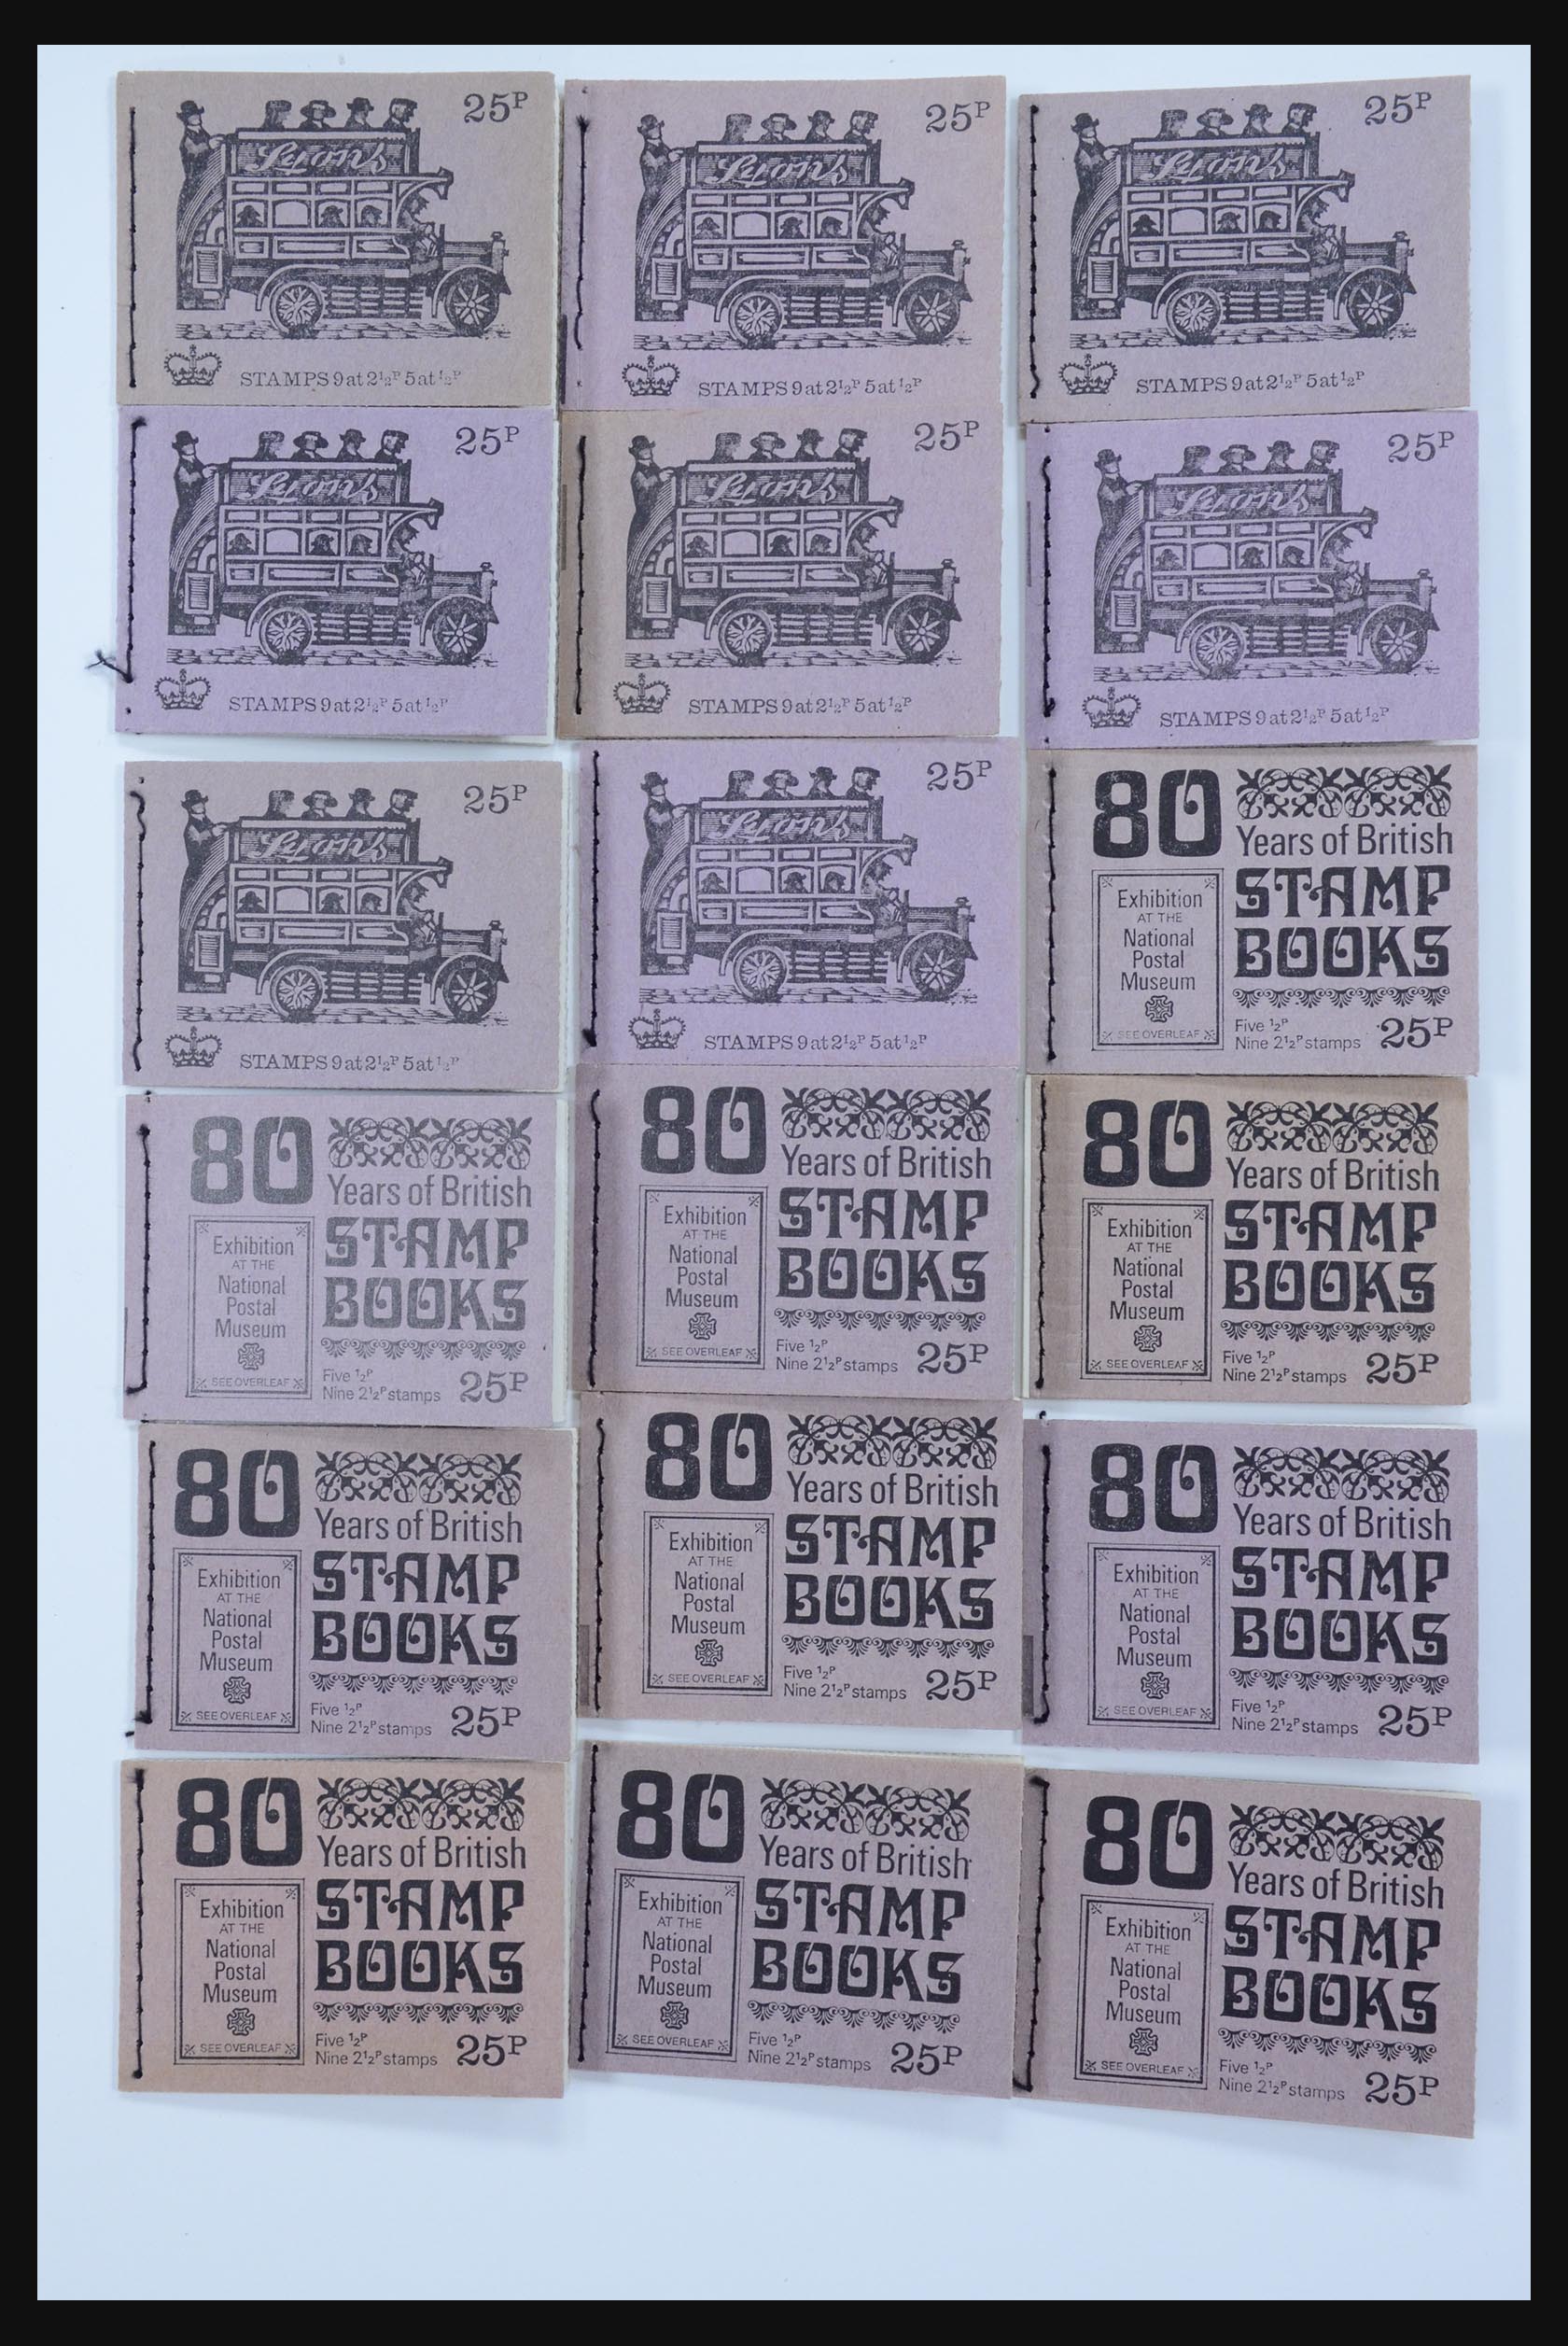 31961 010 - 31961 Great Britain stampbooklets 1971-1999.